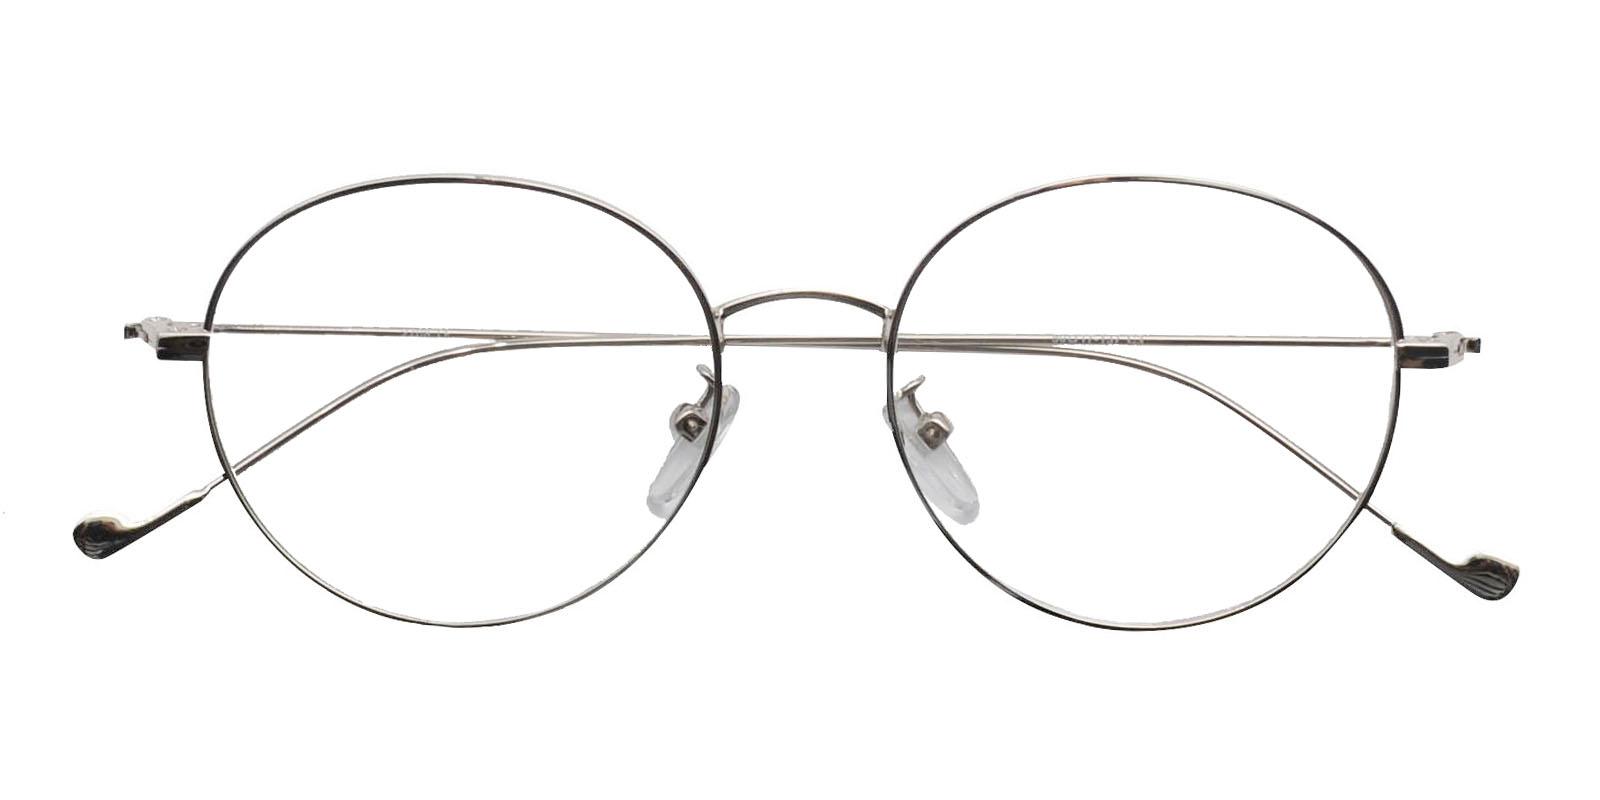 Round Silver Frames Glasses